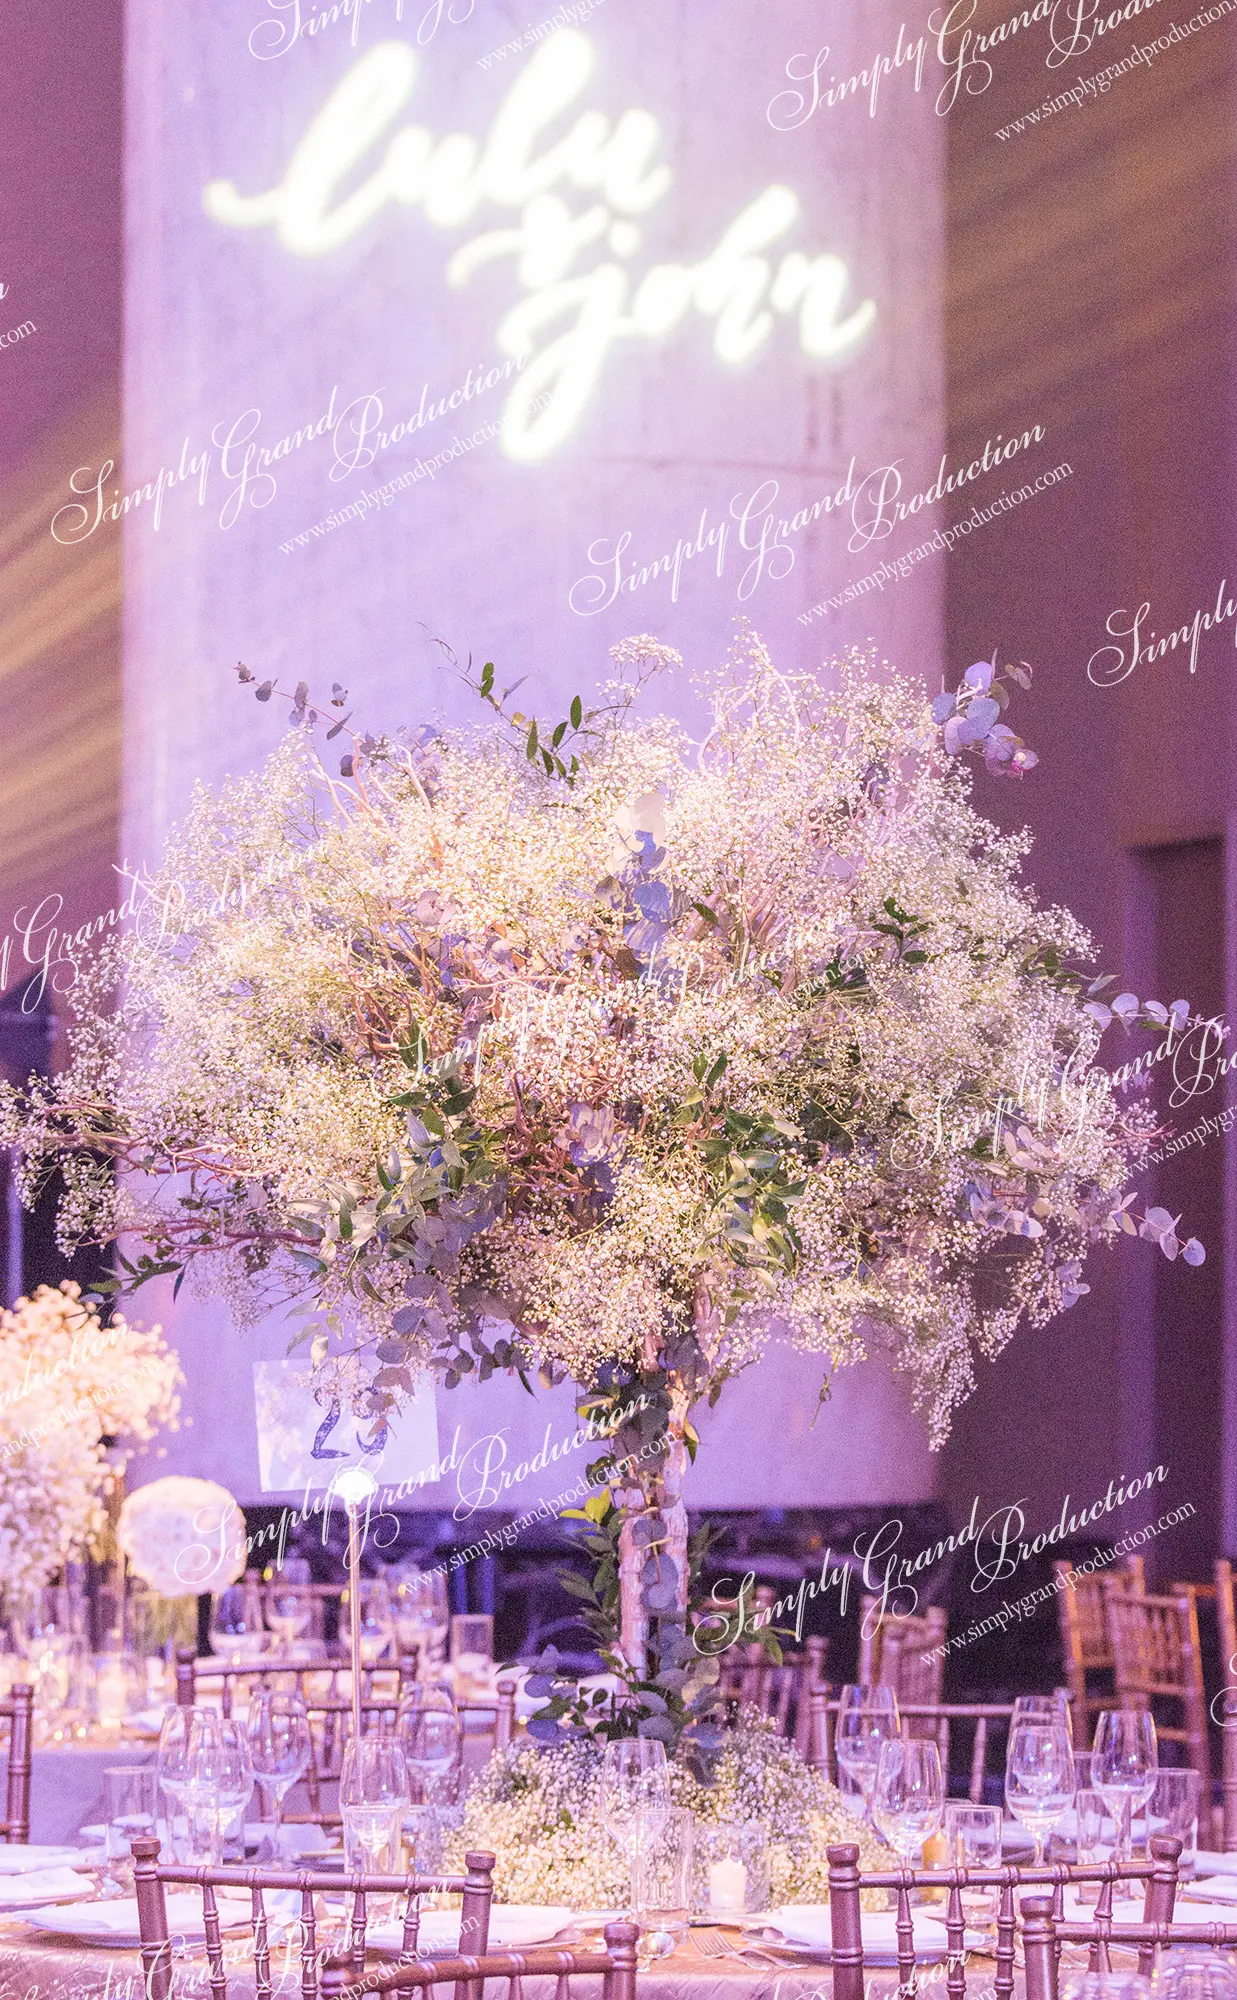 Simply_Grand_Production_Ballroom_wedding_decoration_centerpiece_gobo_weddingdetails_blooms_Grand_Hyatt_3_7_wm